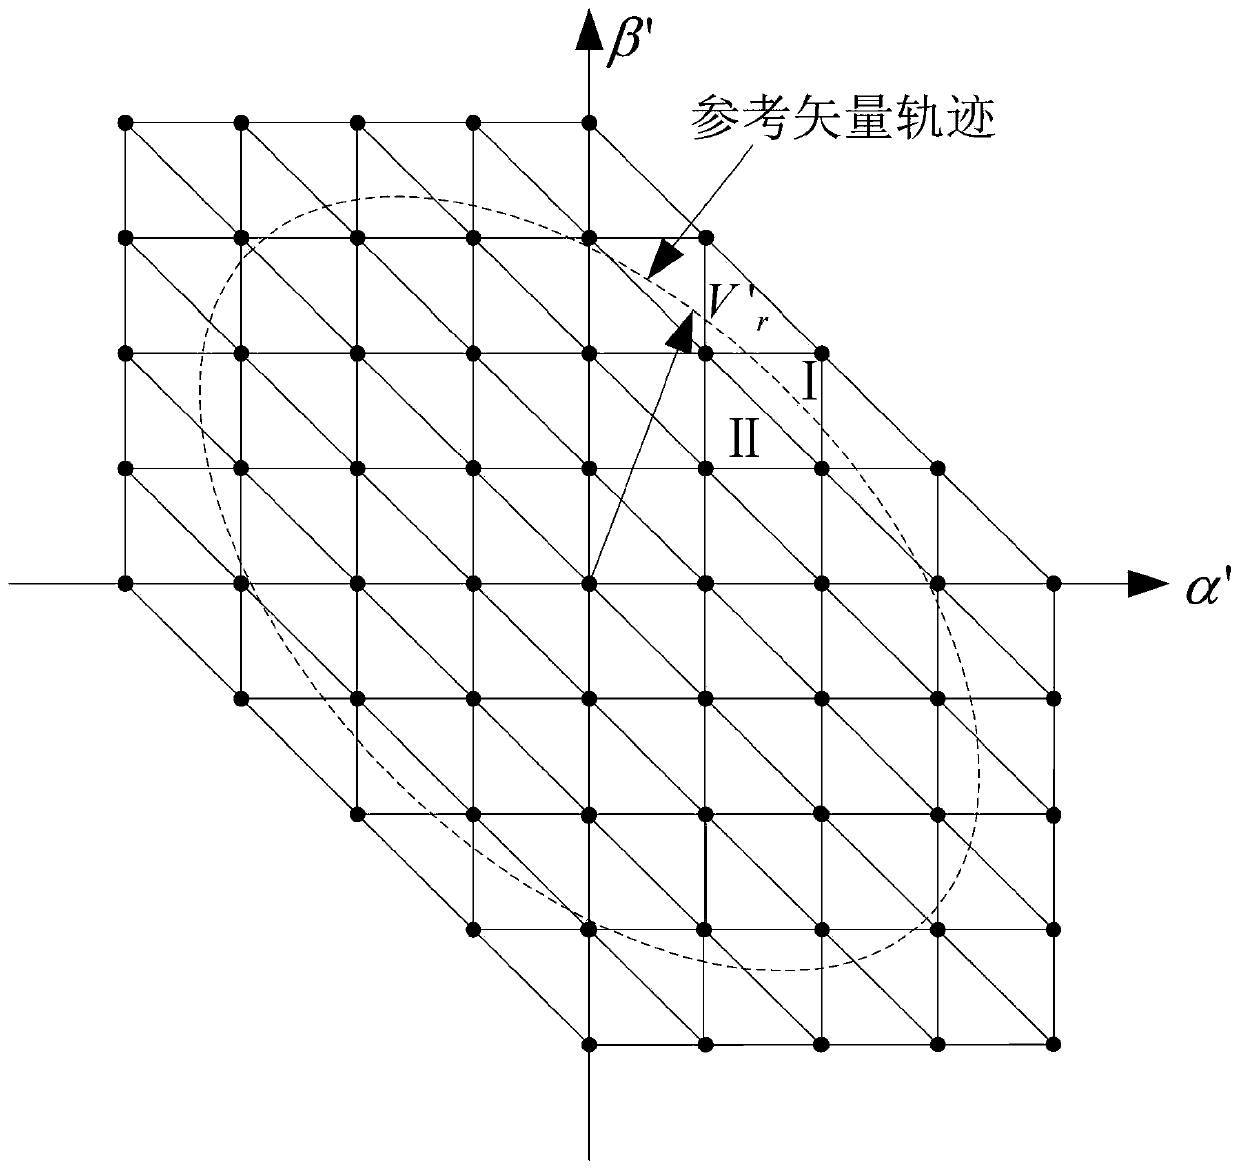 Simplified multi-level converter space vector modulation method